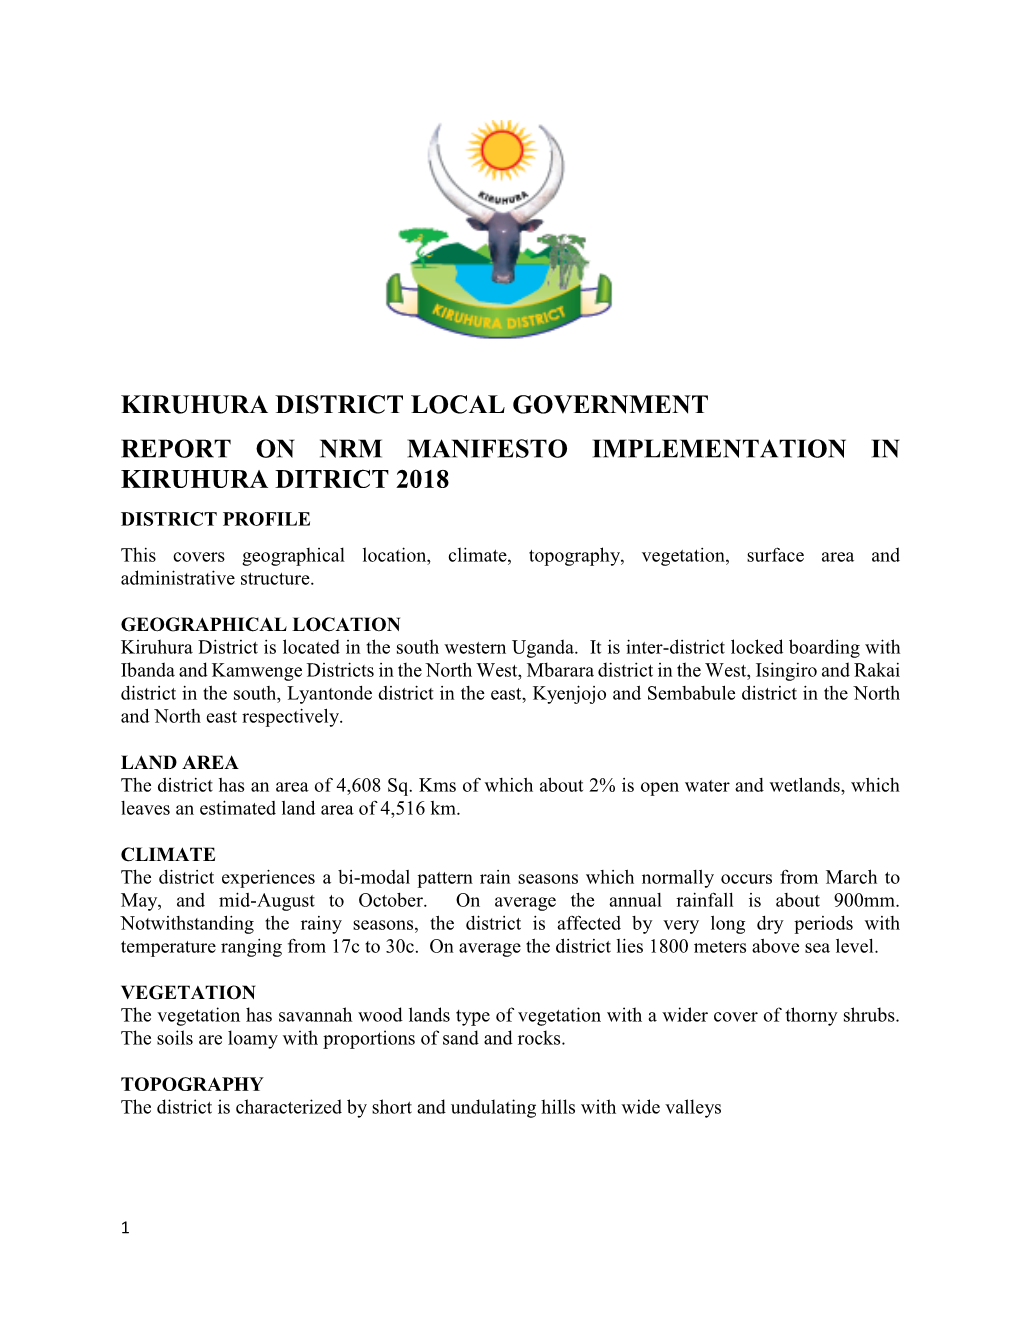 Kiruhura District Local Government Report on Nrm